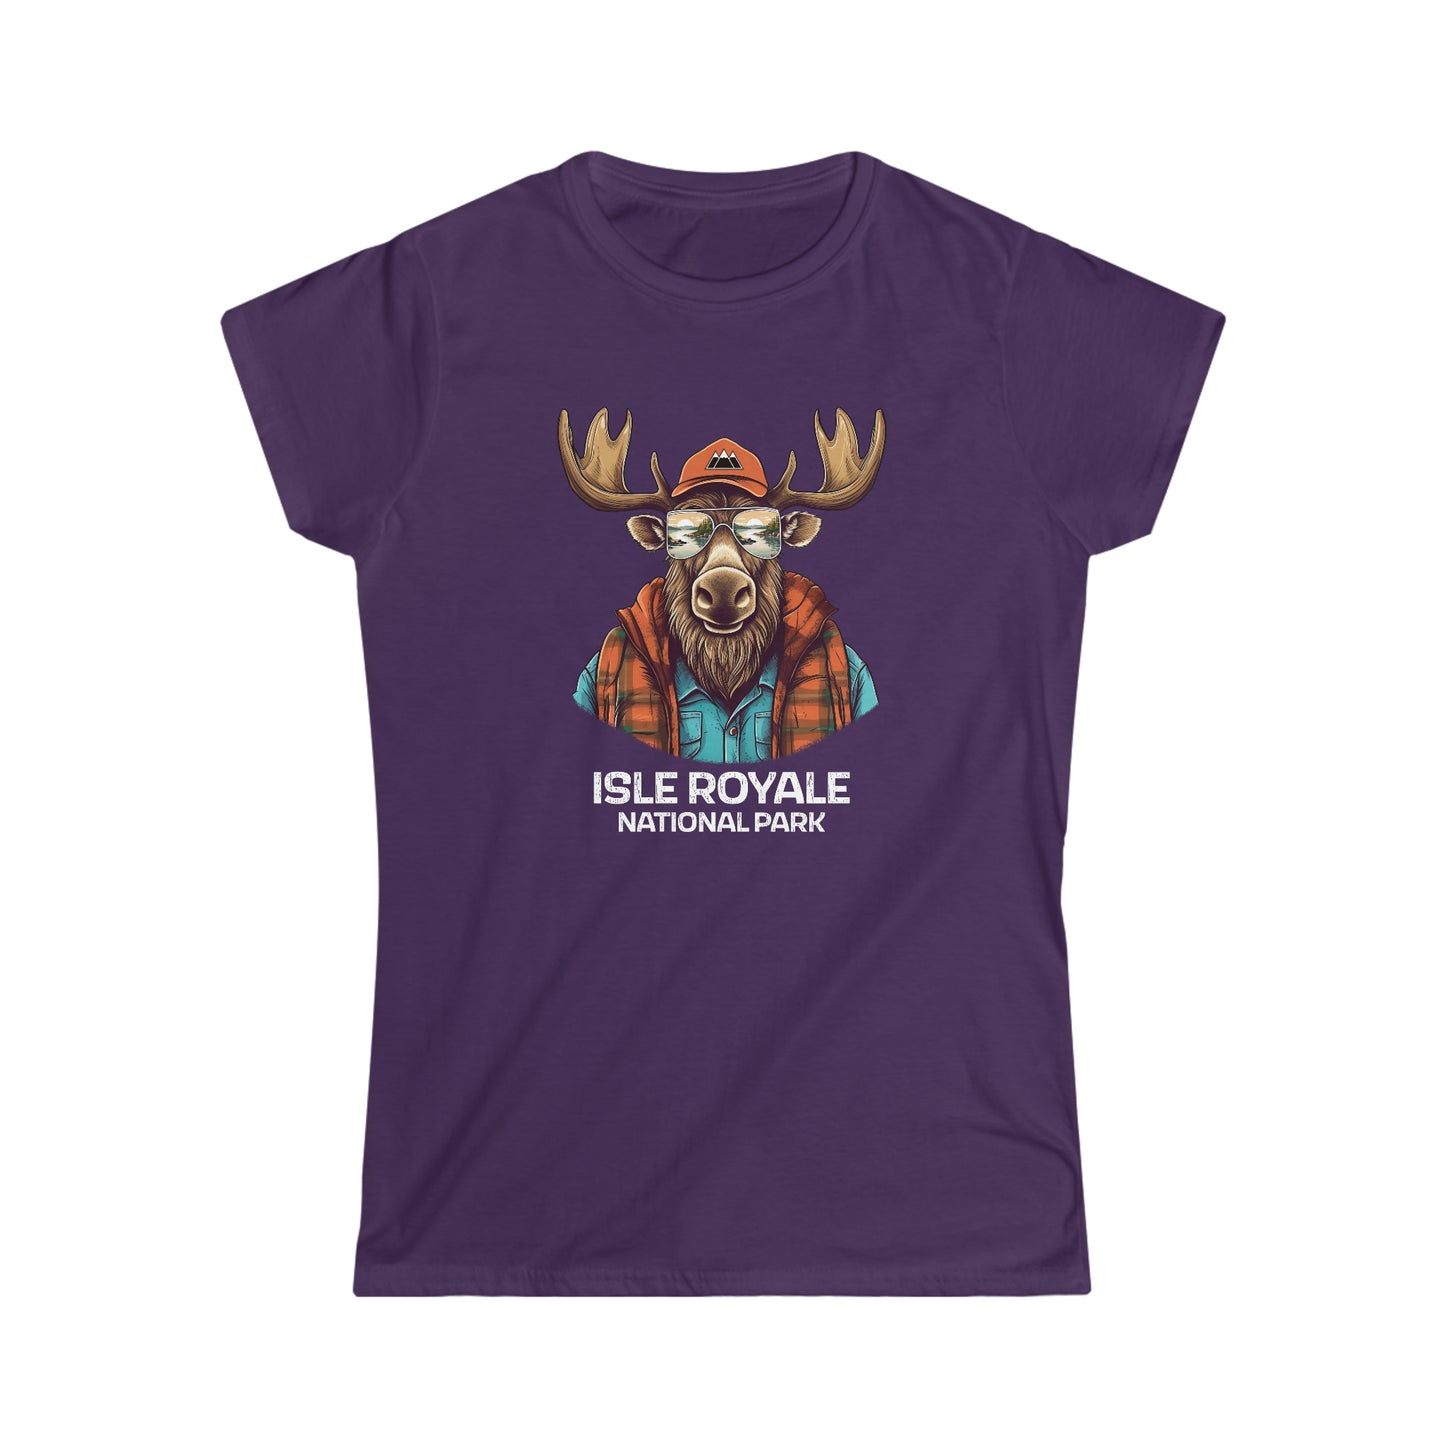 Isle Royale National Park Women's T-Shirt - Cool Moose